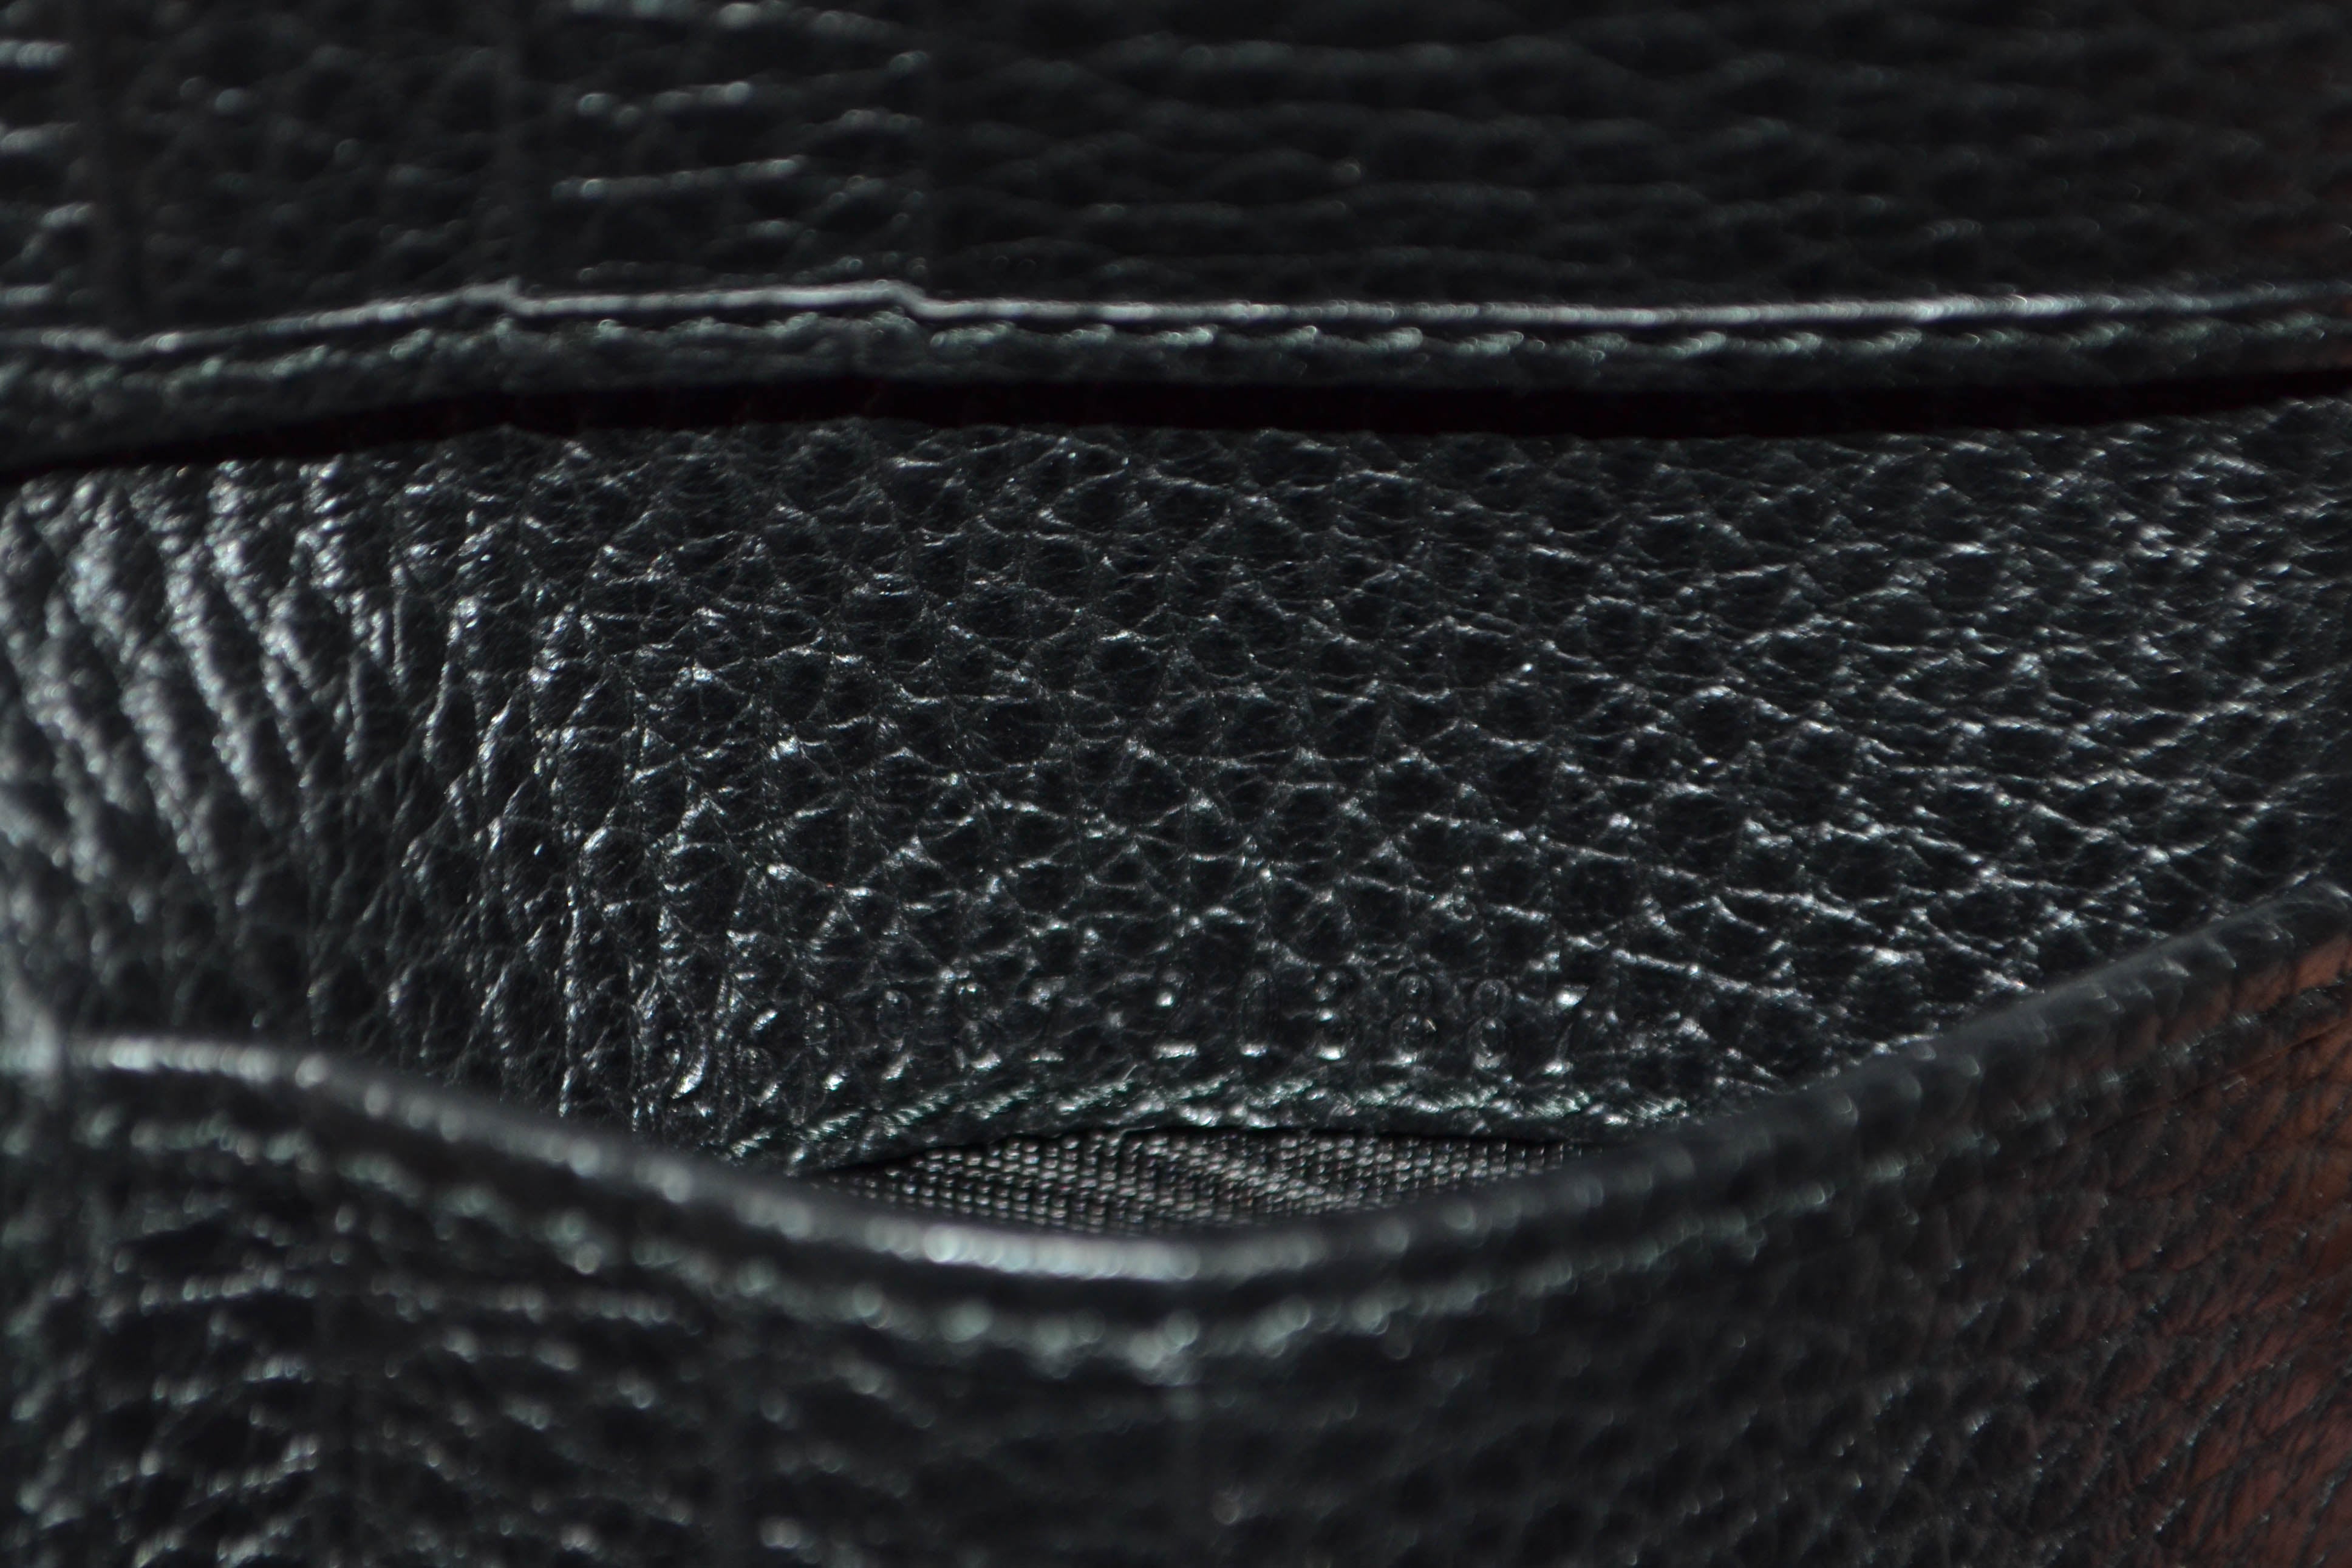 New Authentic Gucci Black Men's Leather Bi-Fold Wallet